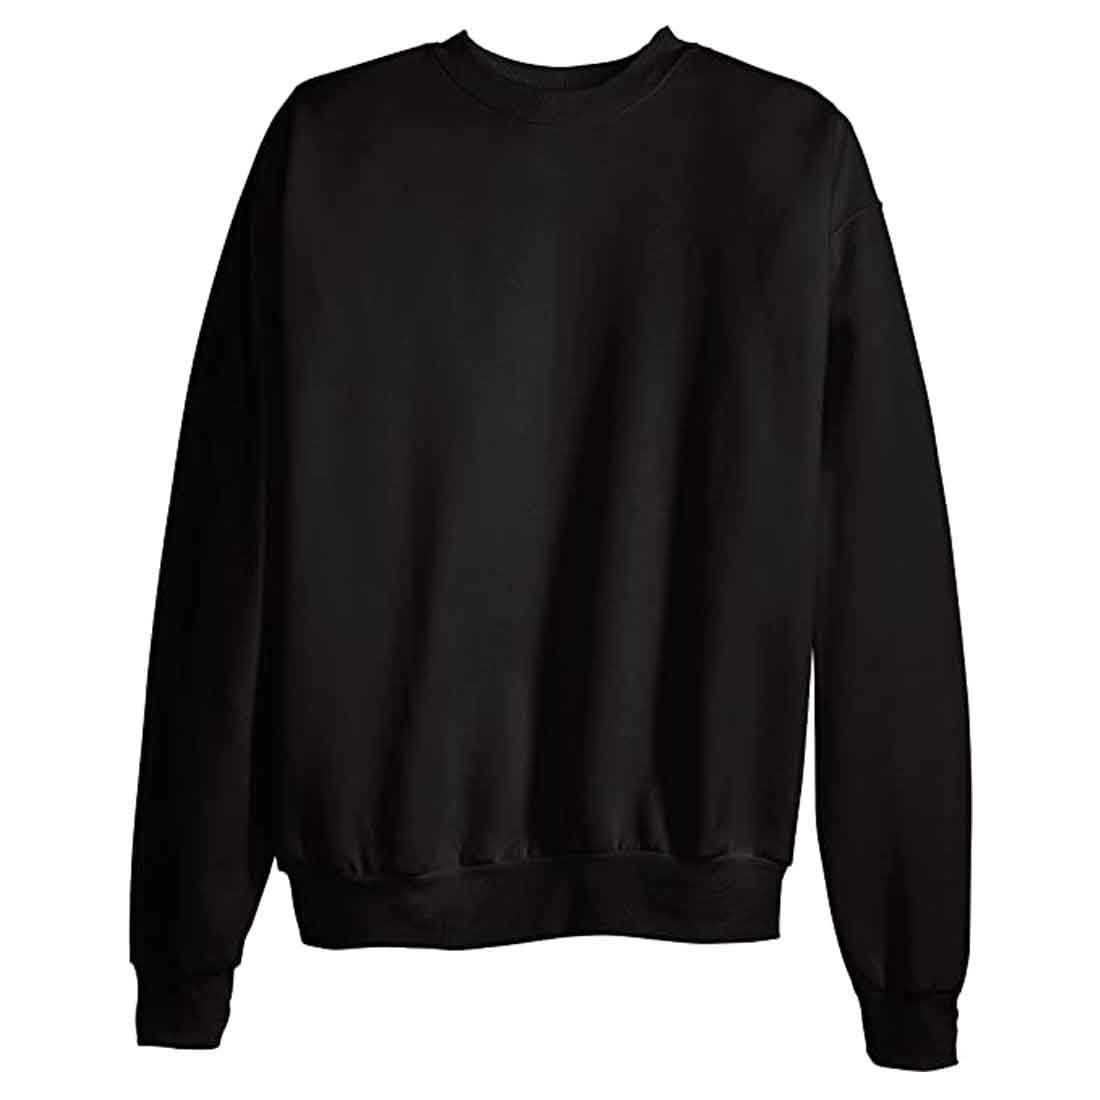 Cotton Designer Sweatshirts for Men Round Neck - Scorpio